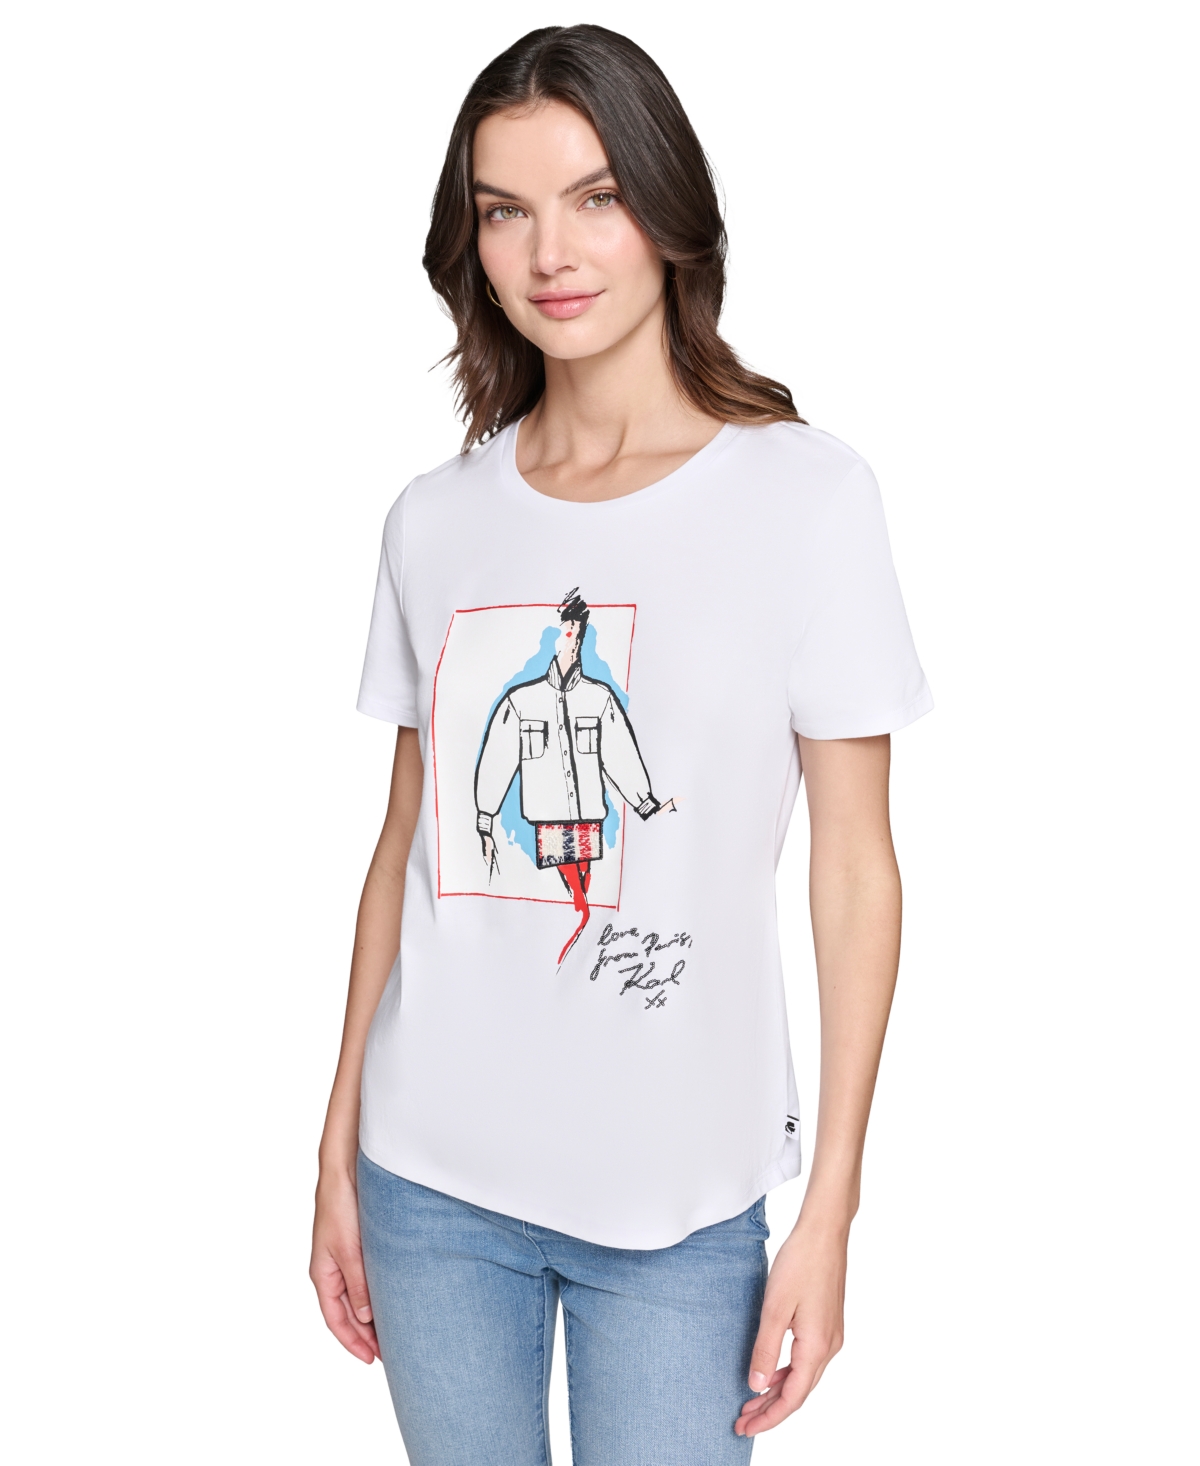 Women's Sketch Girl Graphic T-Shirt - White